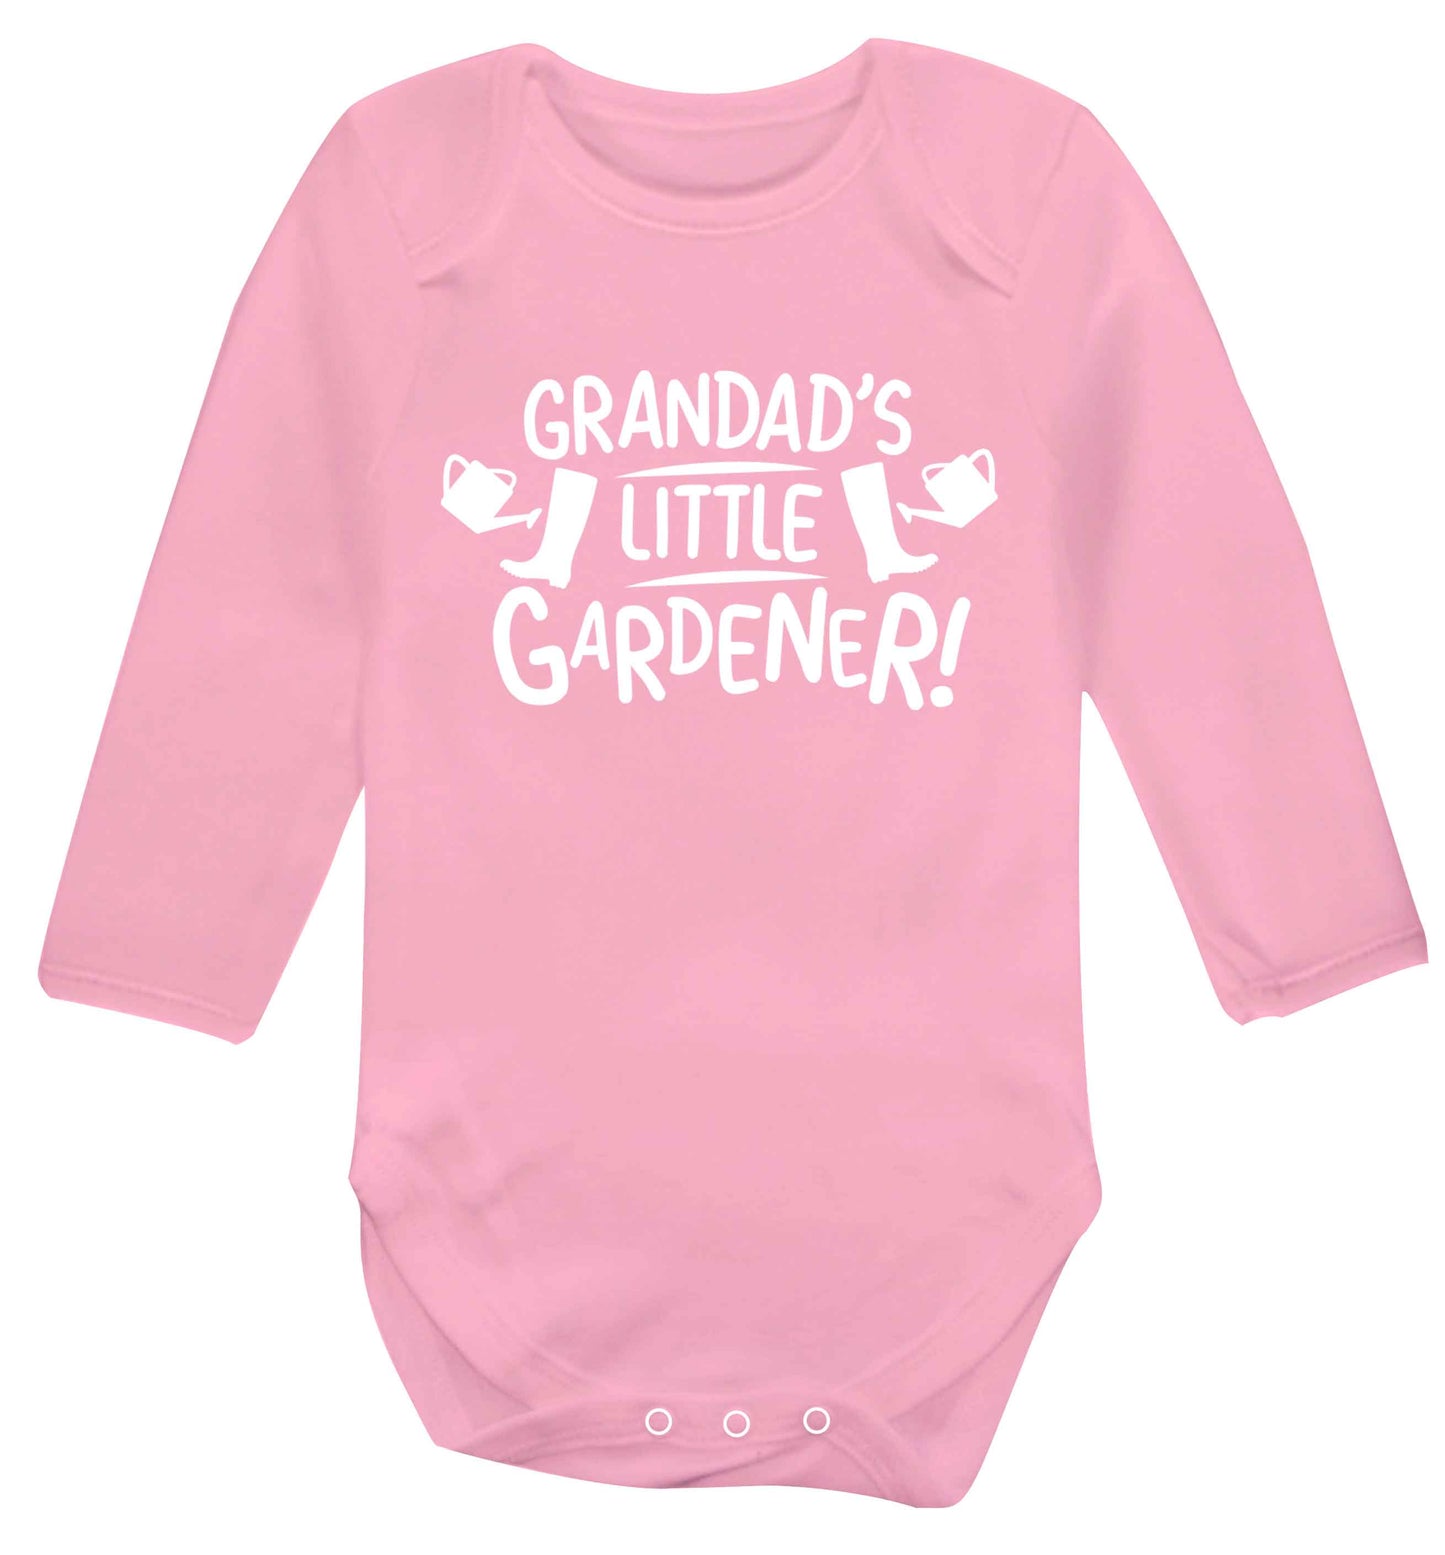 Grandad's little gardener Baby Vest long sleeved pale pink 6-12 months